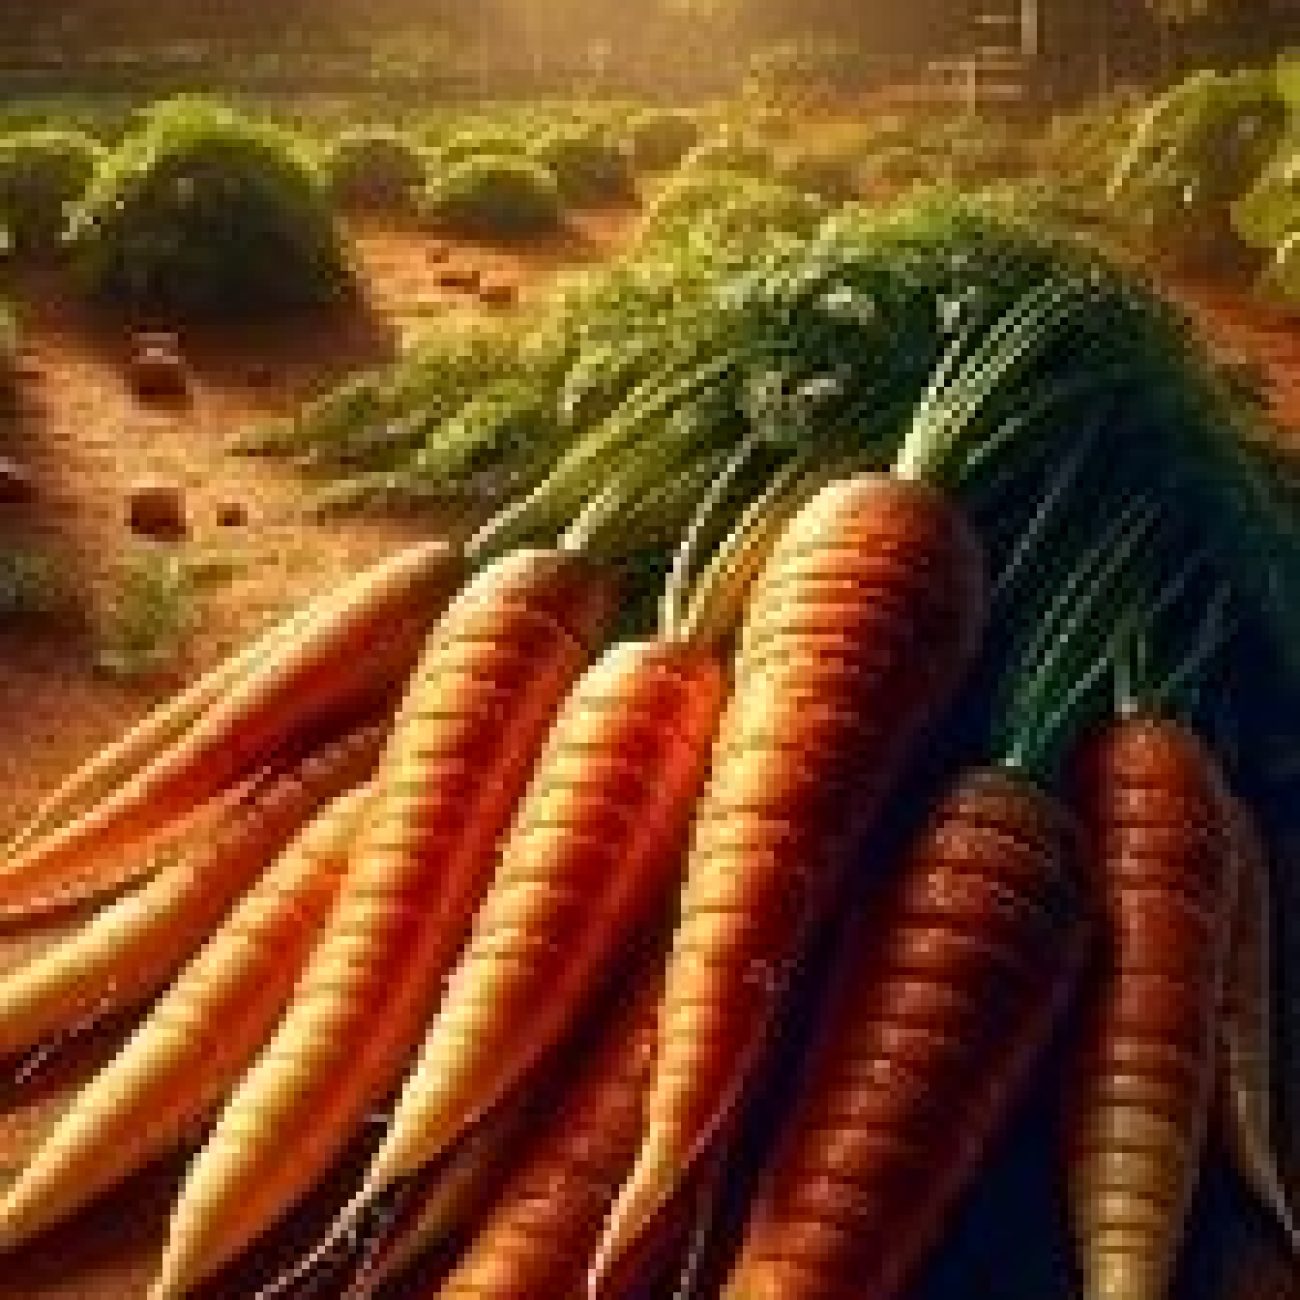 20S Style Crunchy Carrots